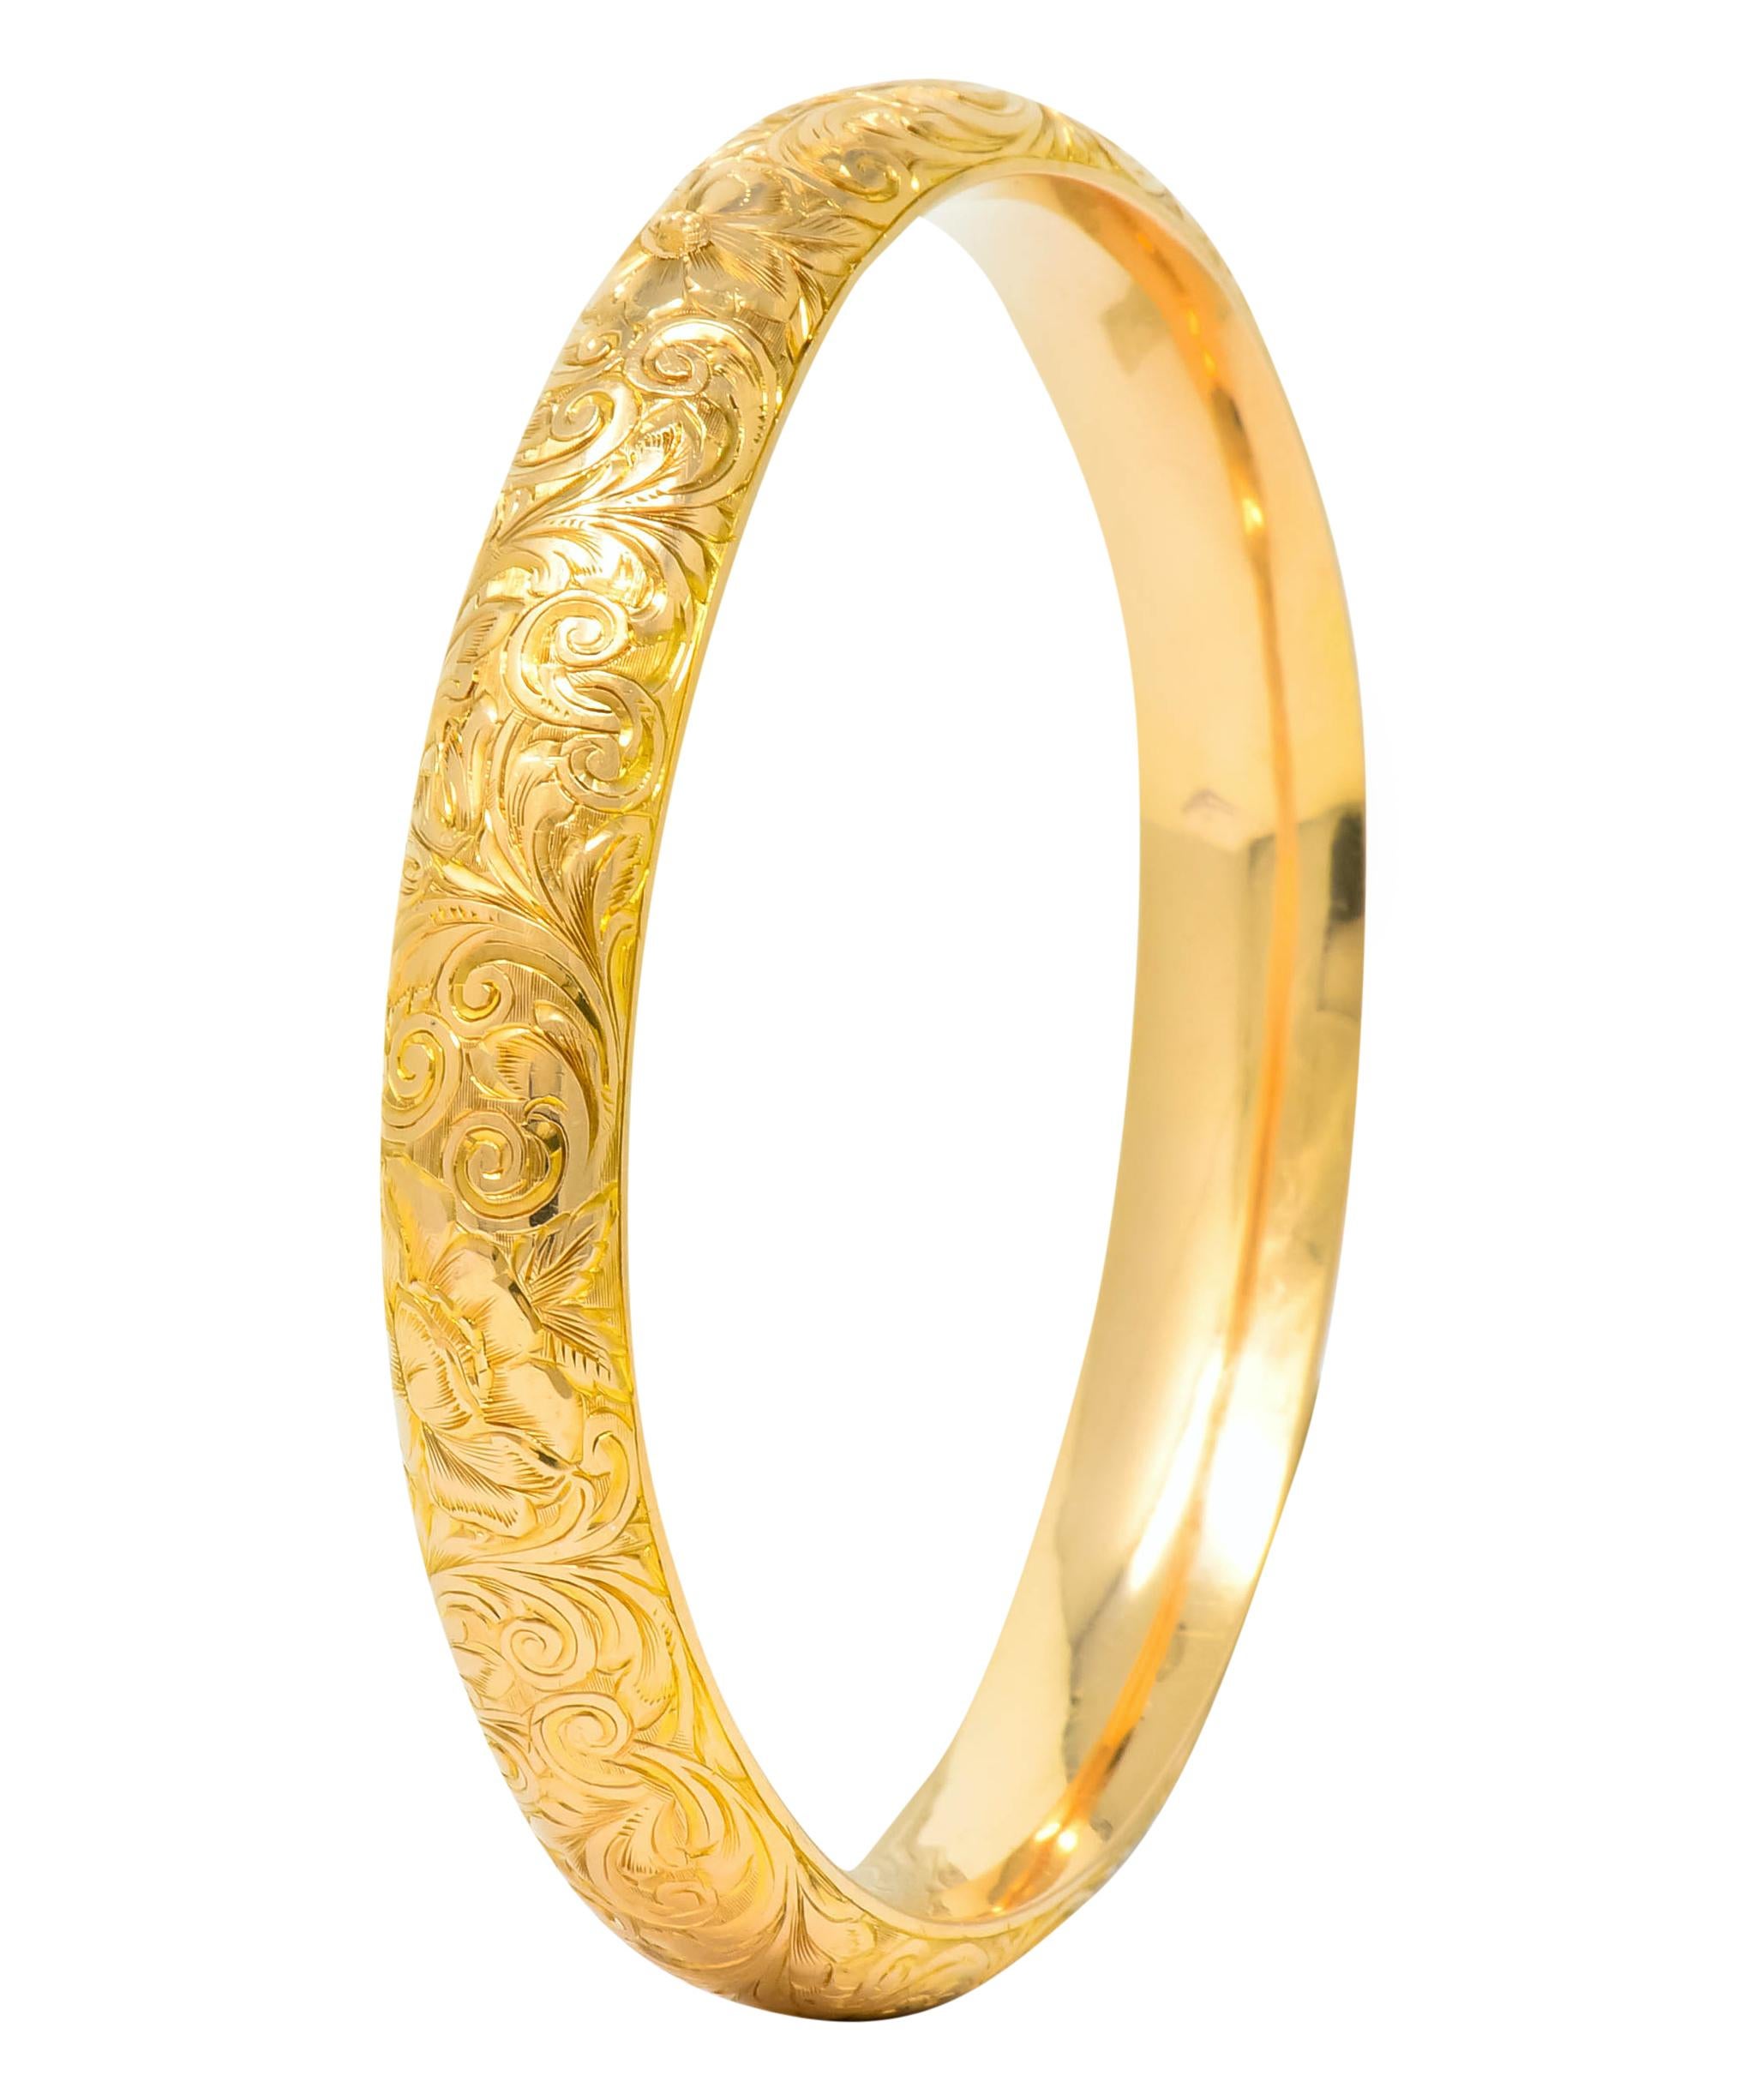 Riker Brothers Art Nouveau 14 Karat Gold Floral Bangle Bracelet 2